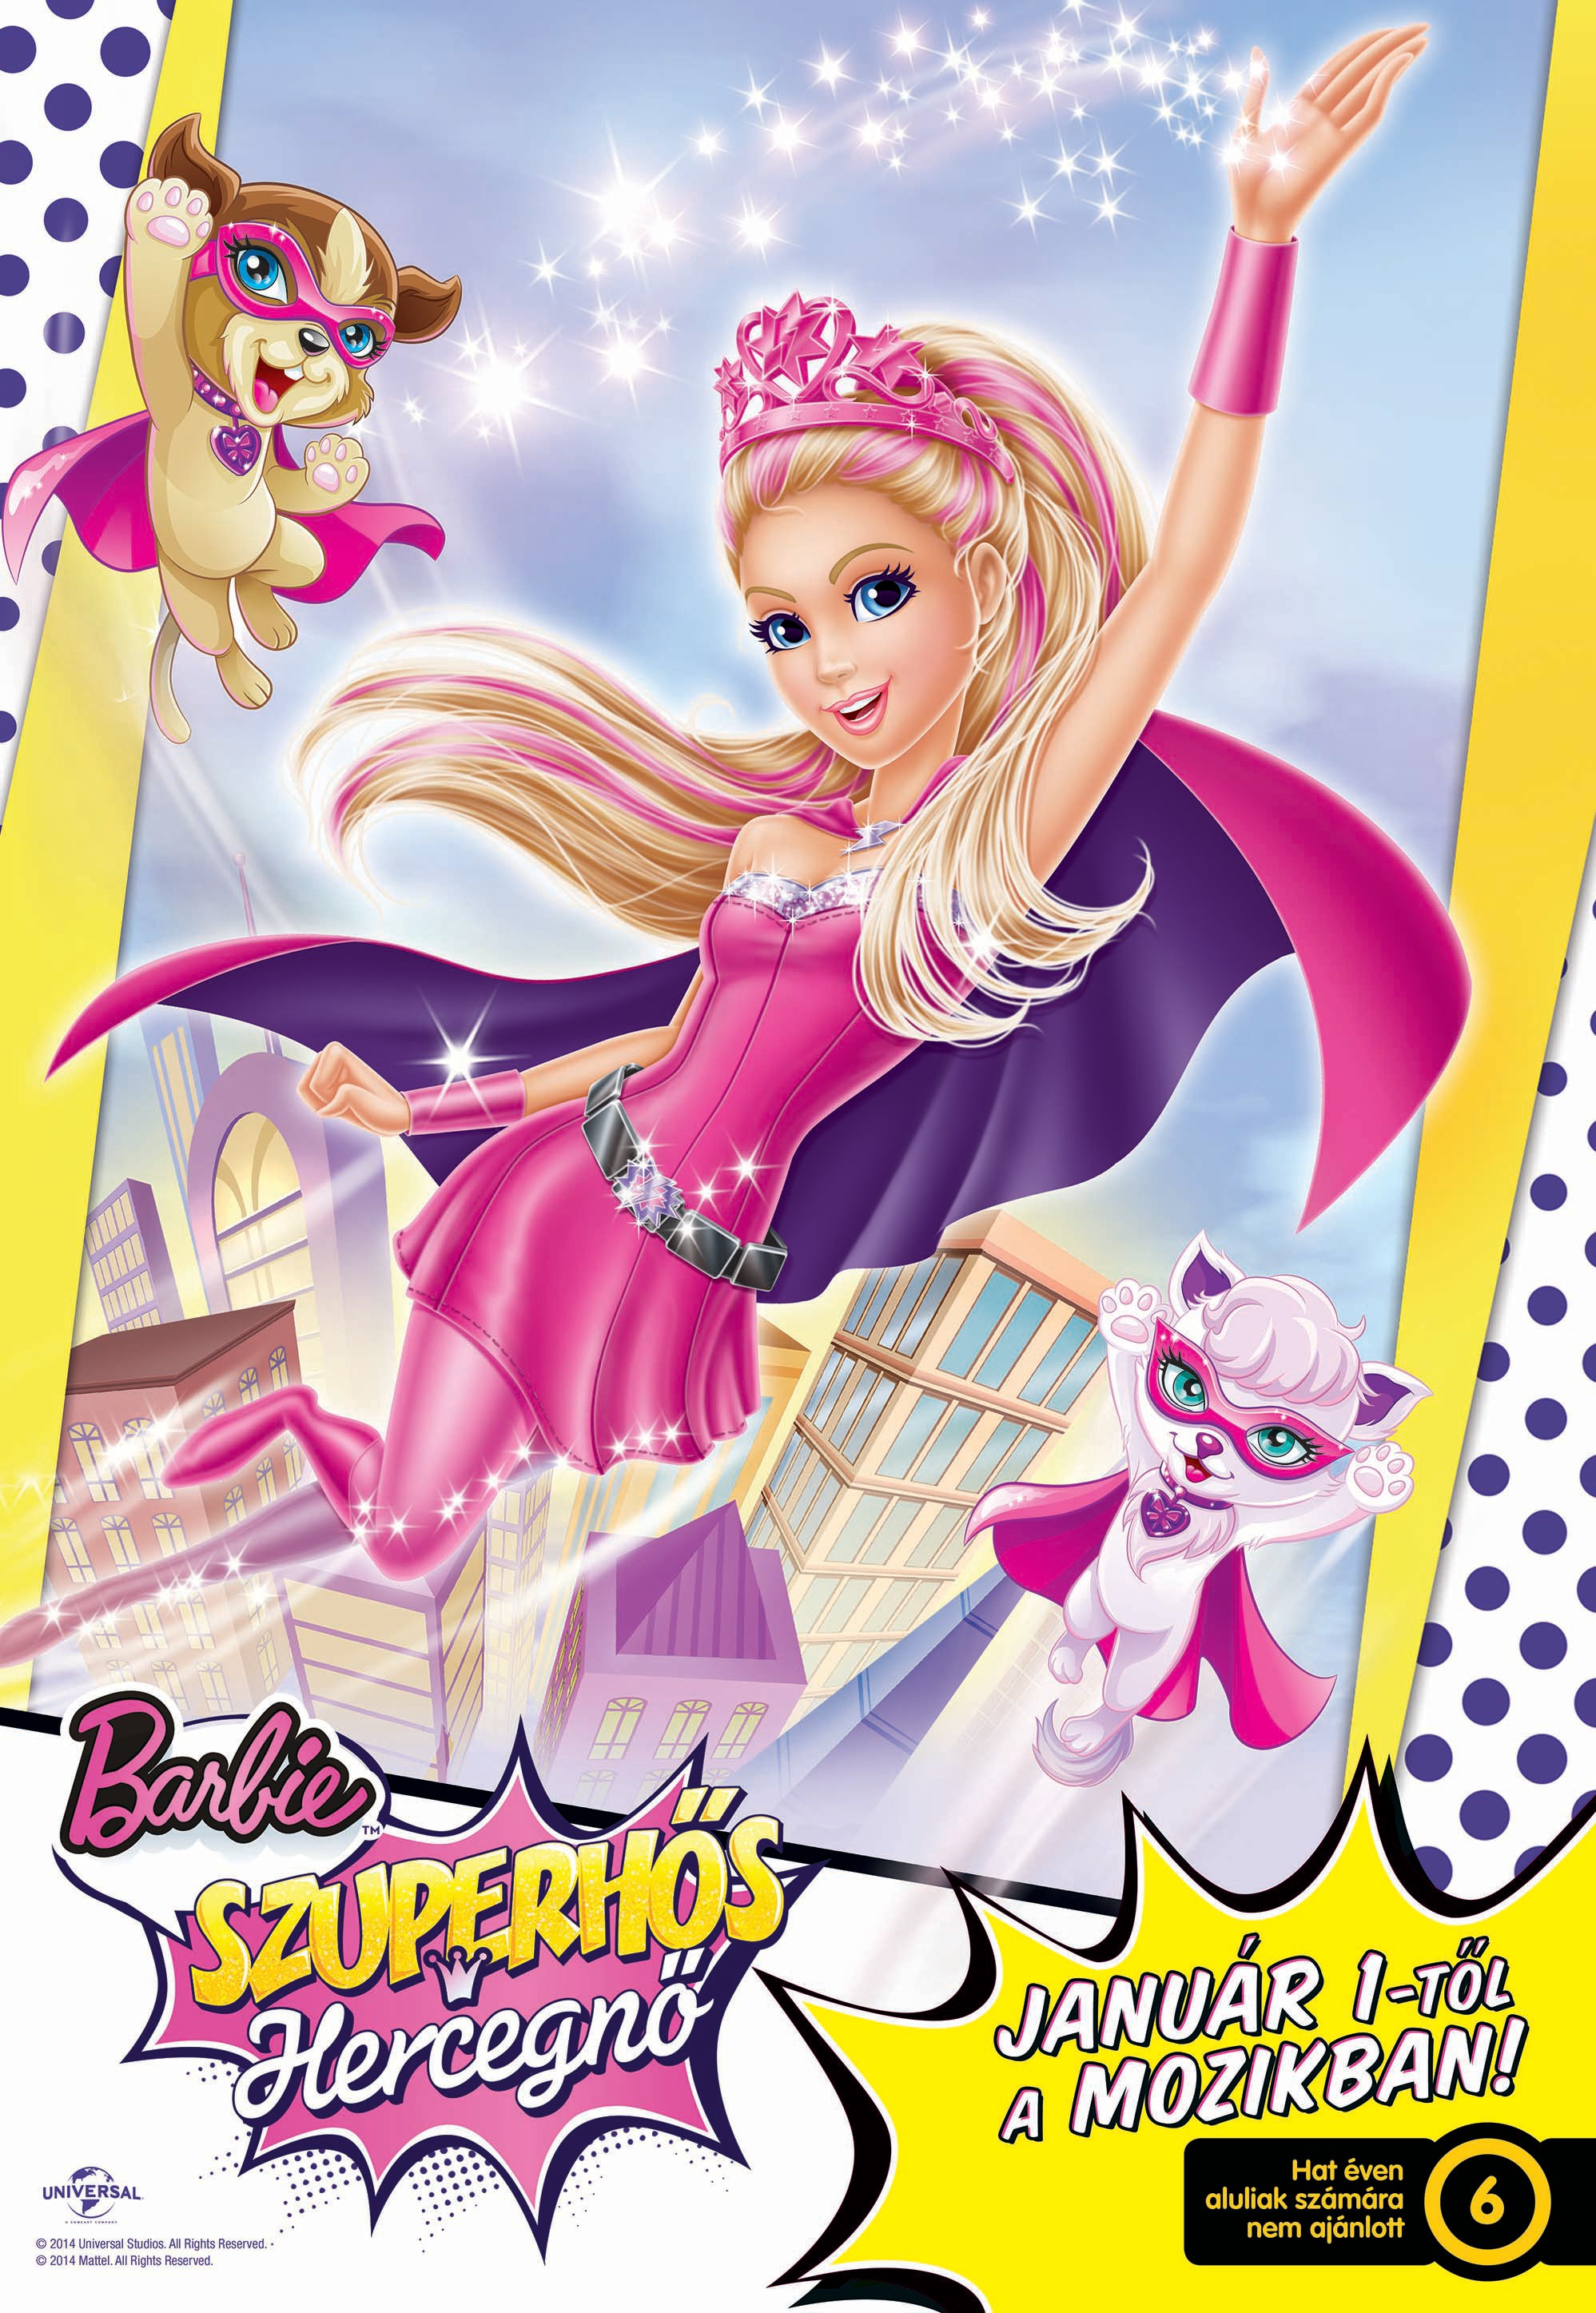 barbie-szuperhos-hercegno